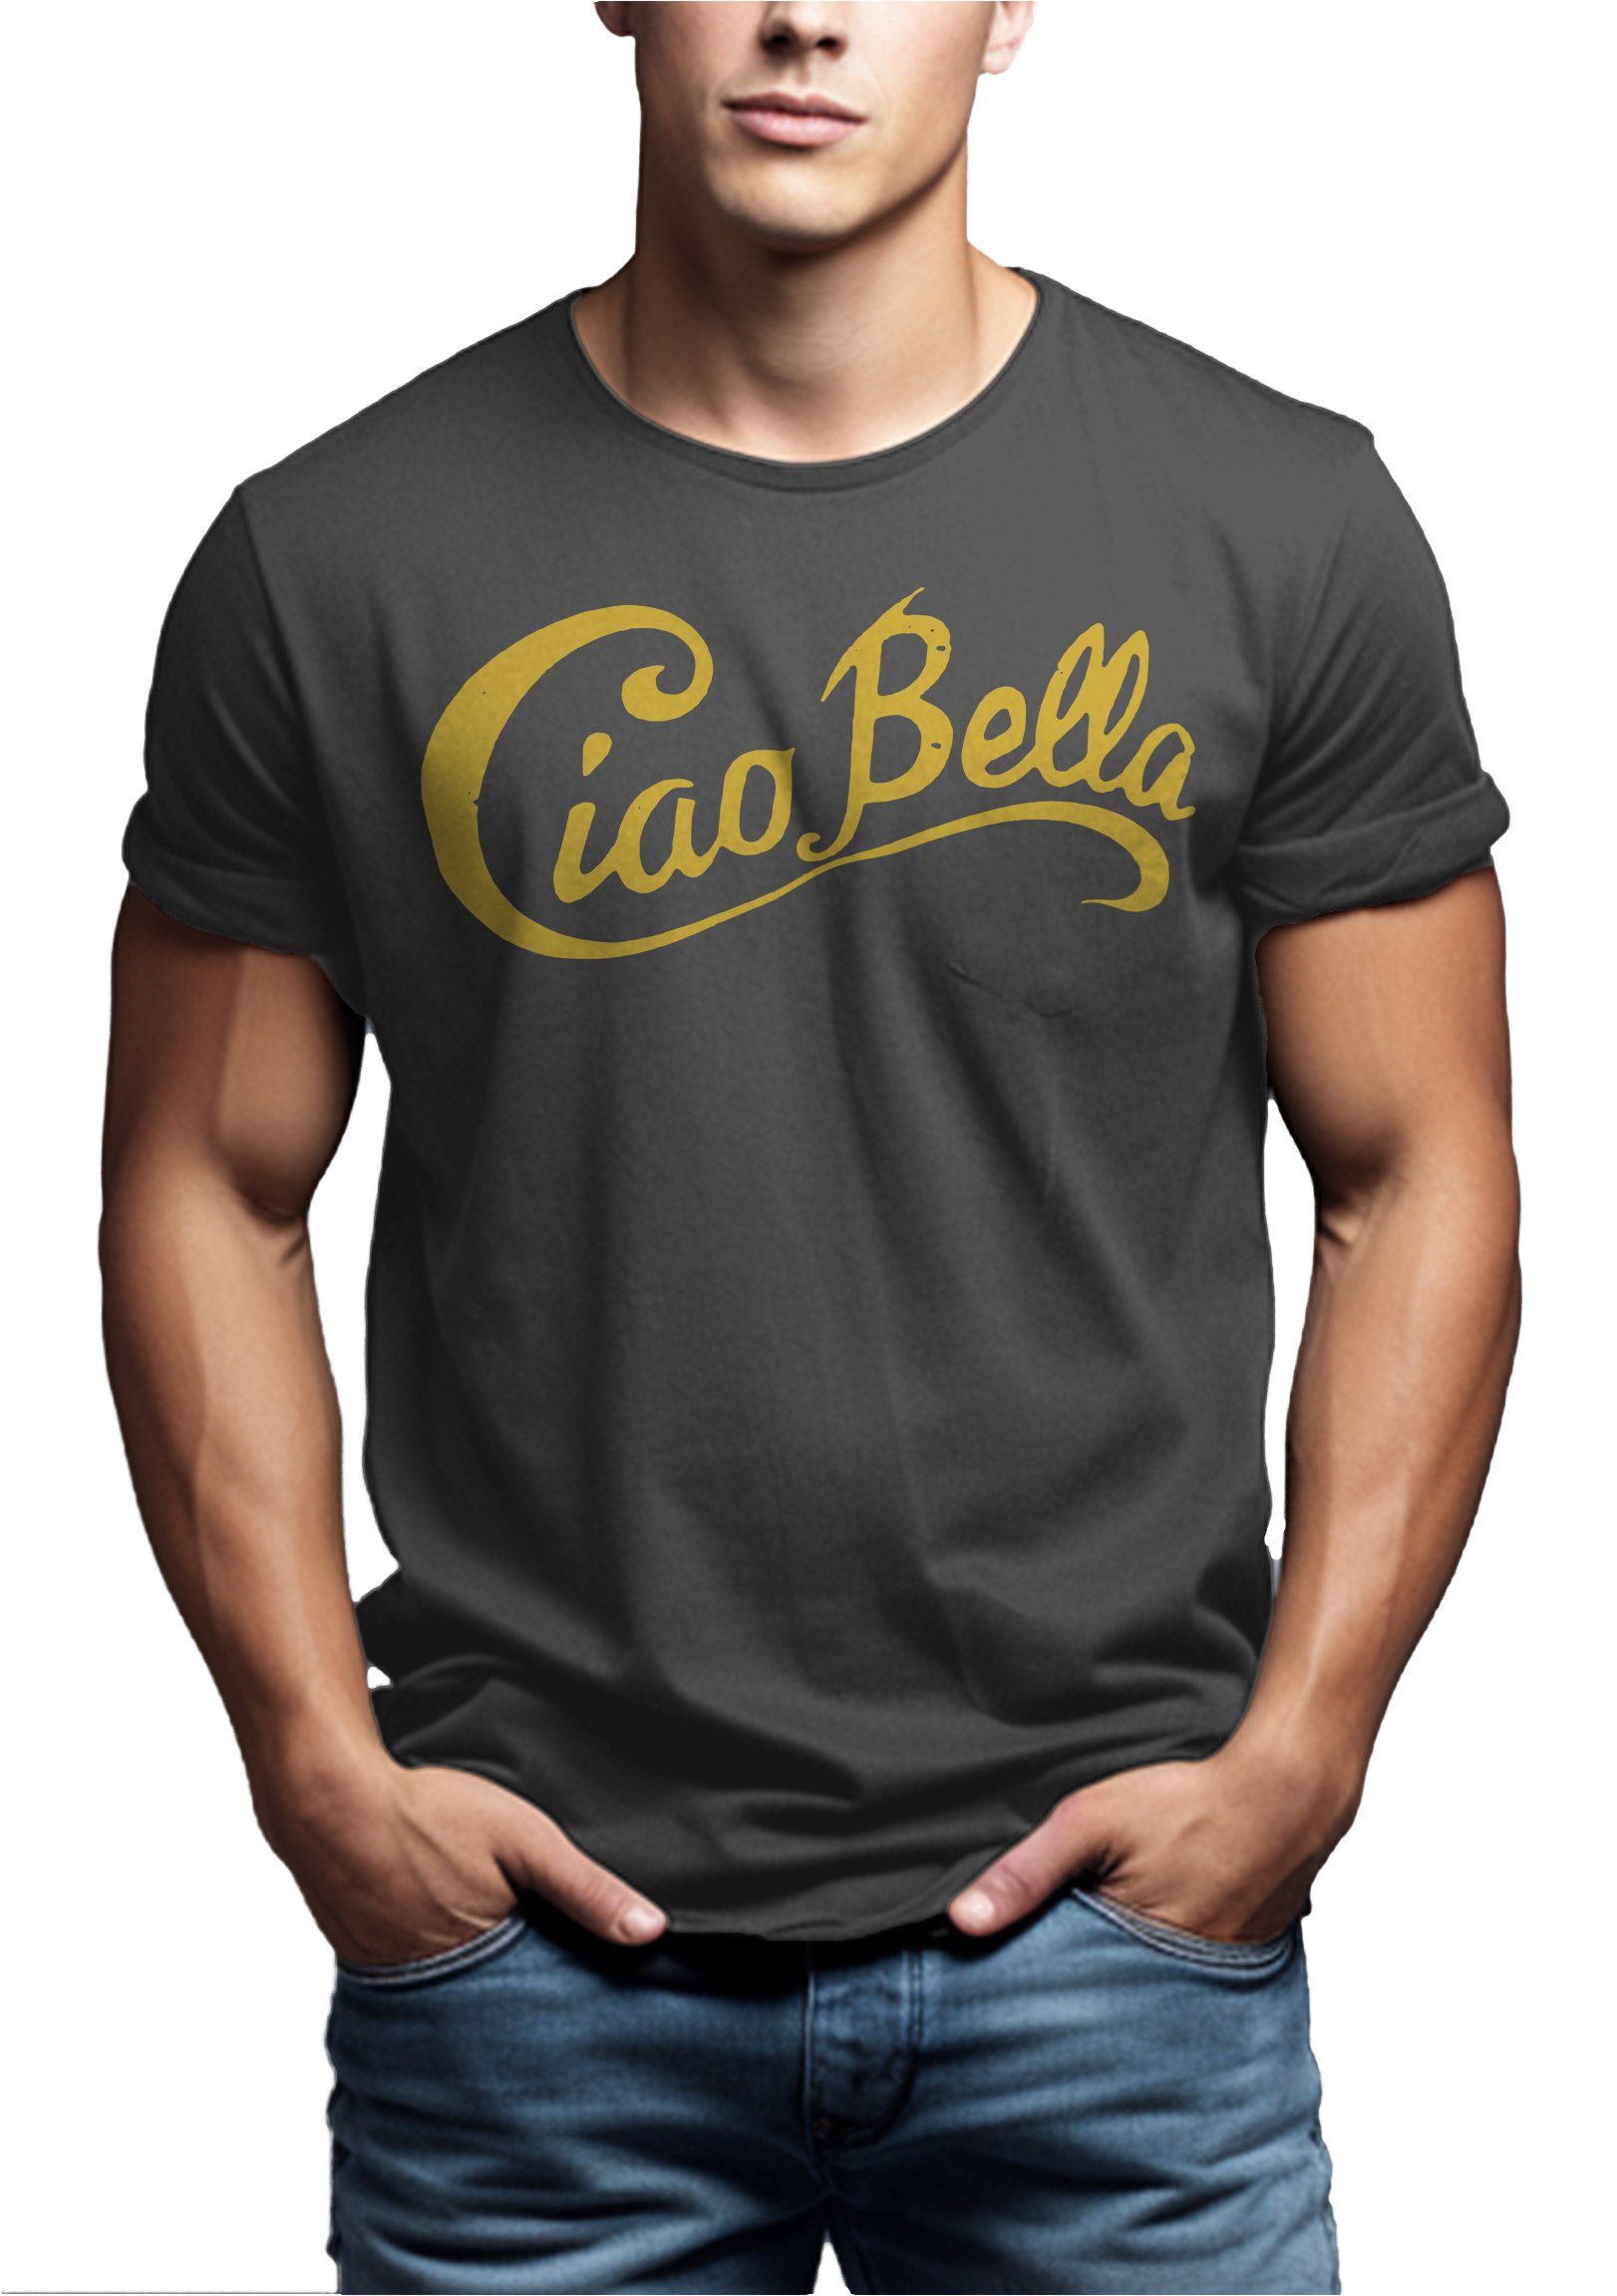 MAKAYA Print-Shirt Herren Italienischer Spruch Italien Bella Coole Motiv Logo, Ciao Style Grau Mode